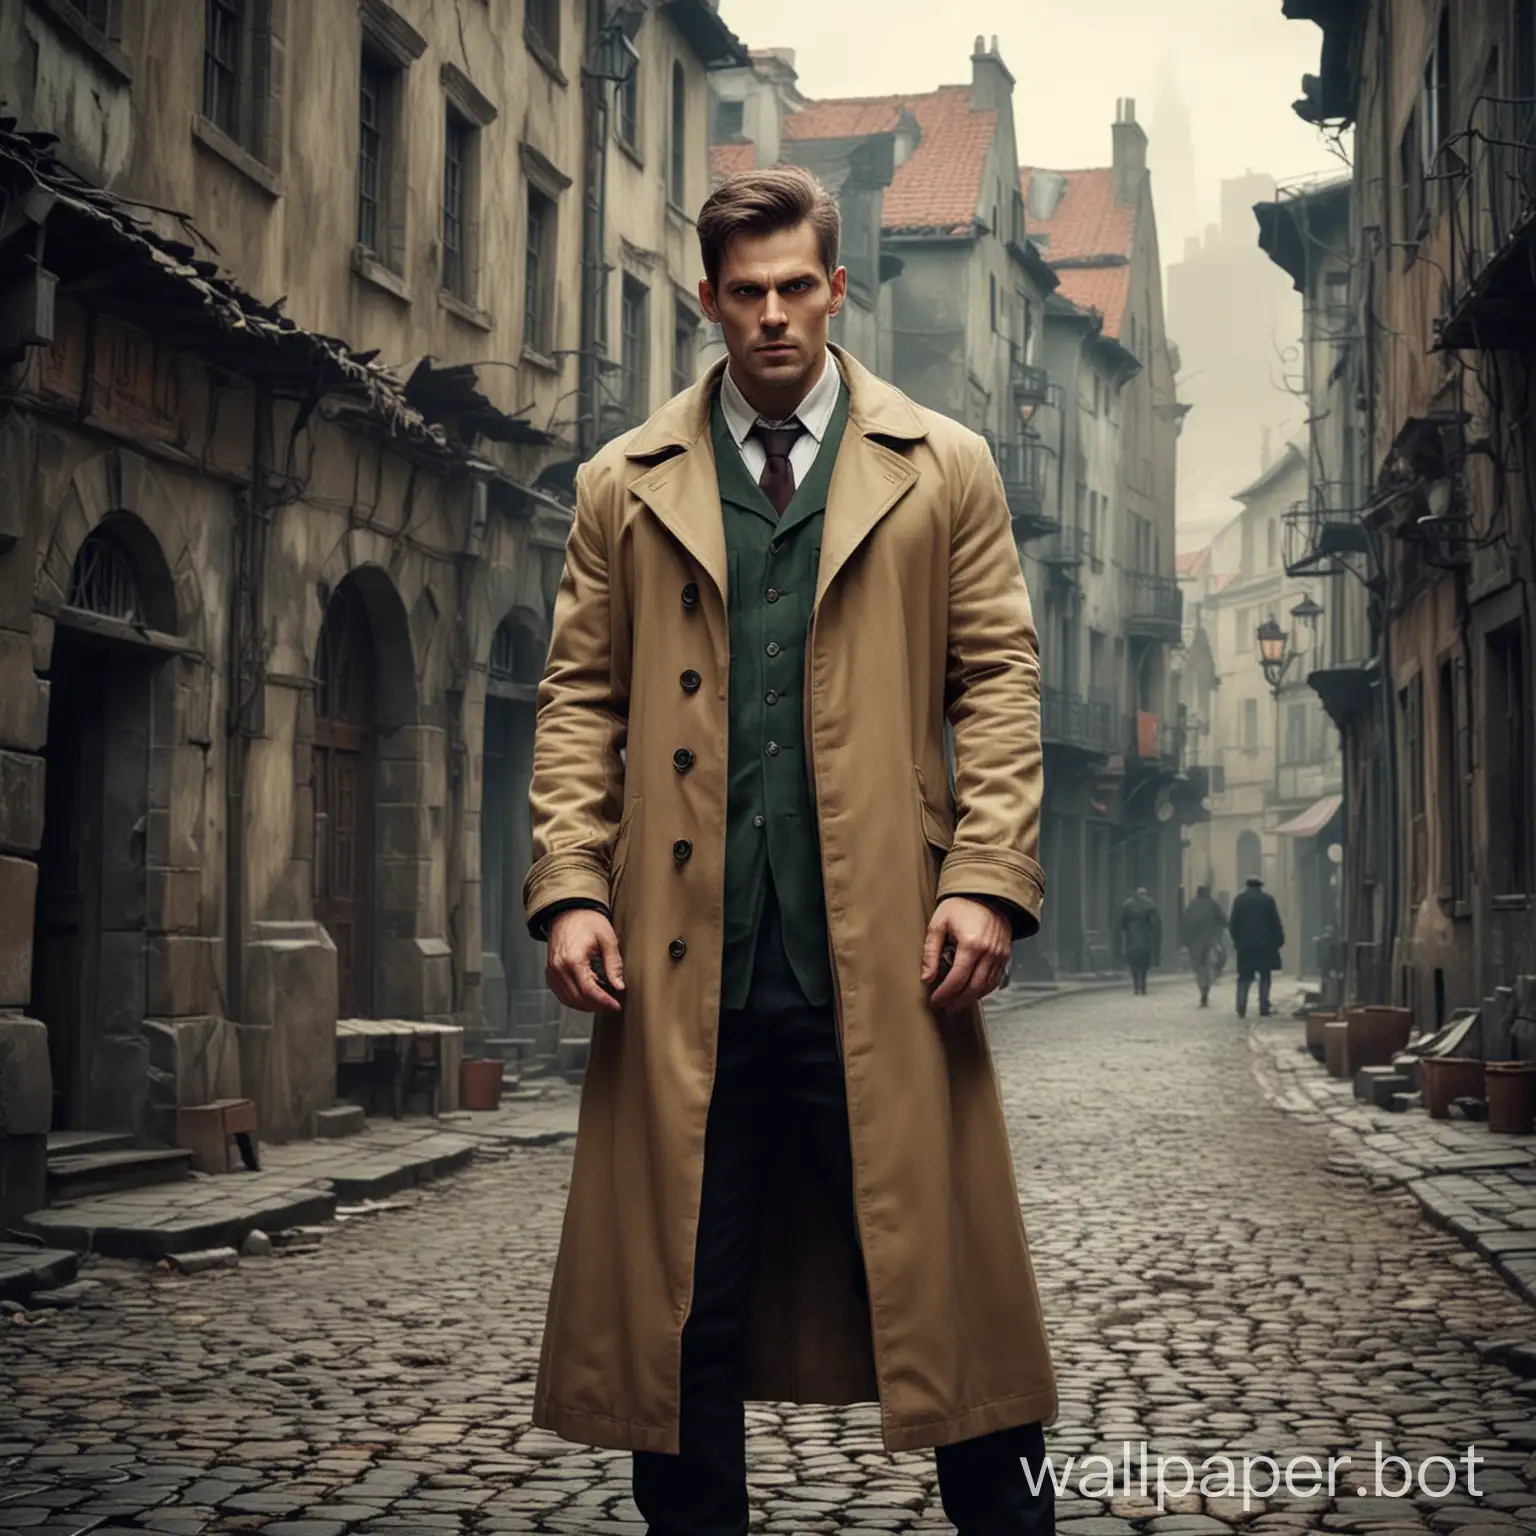 fantasy brutal doctor, in long khaki coat against the background of an old fantasy city